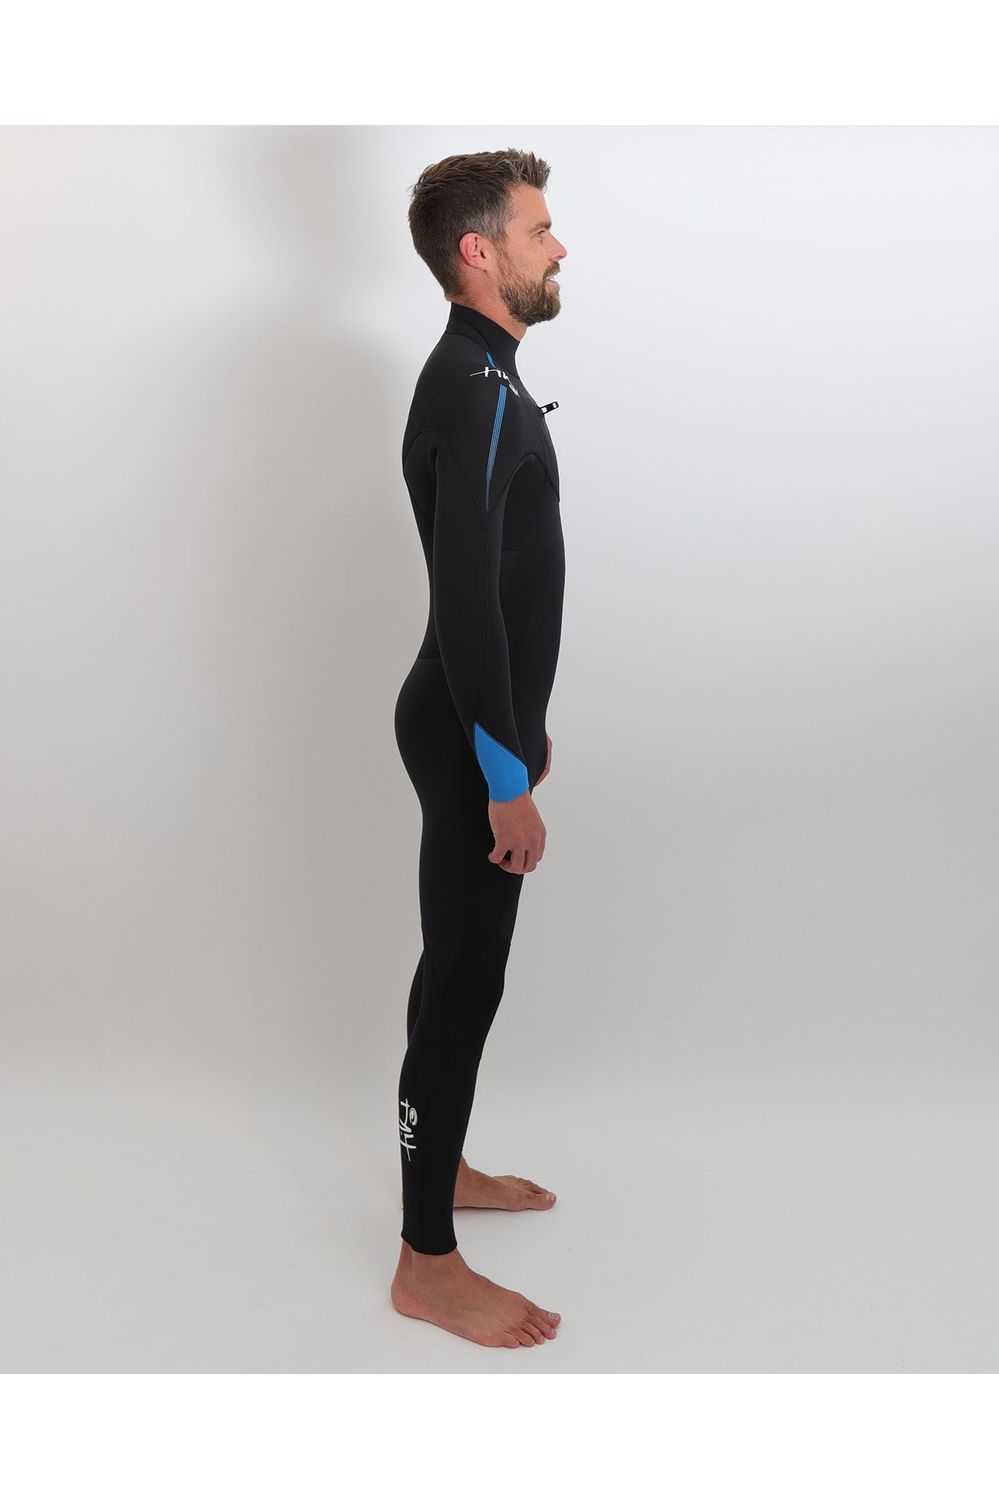 Tiki Mens Tech 3/2 GBS Wetsuit - Chest Zip - Black/Electric Blue